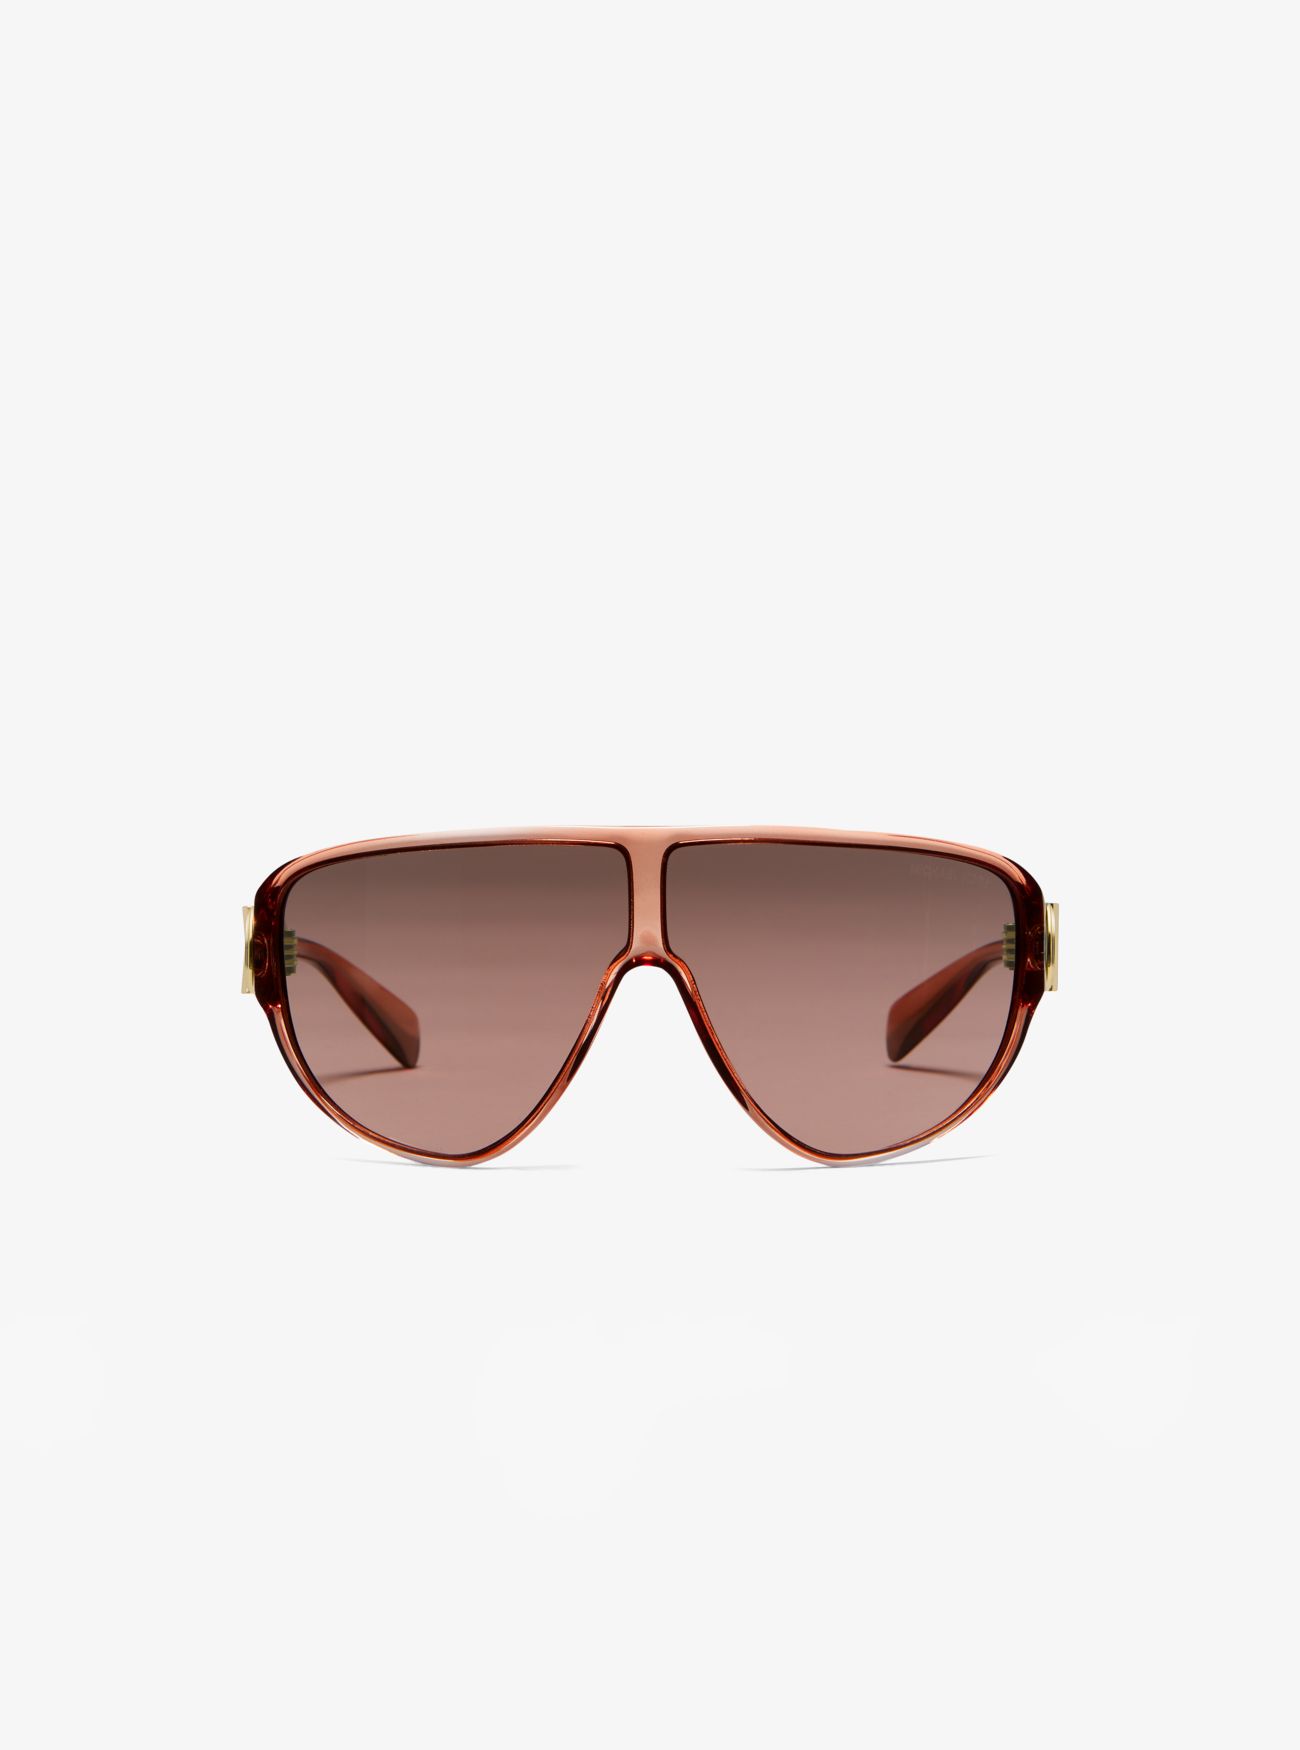 MK Empire Shield Sunglasses - Brown - Michael Kors